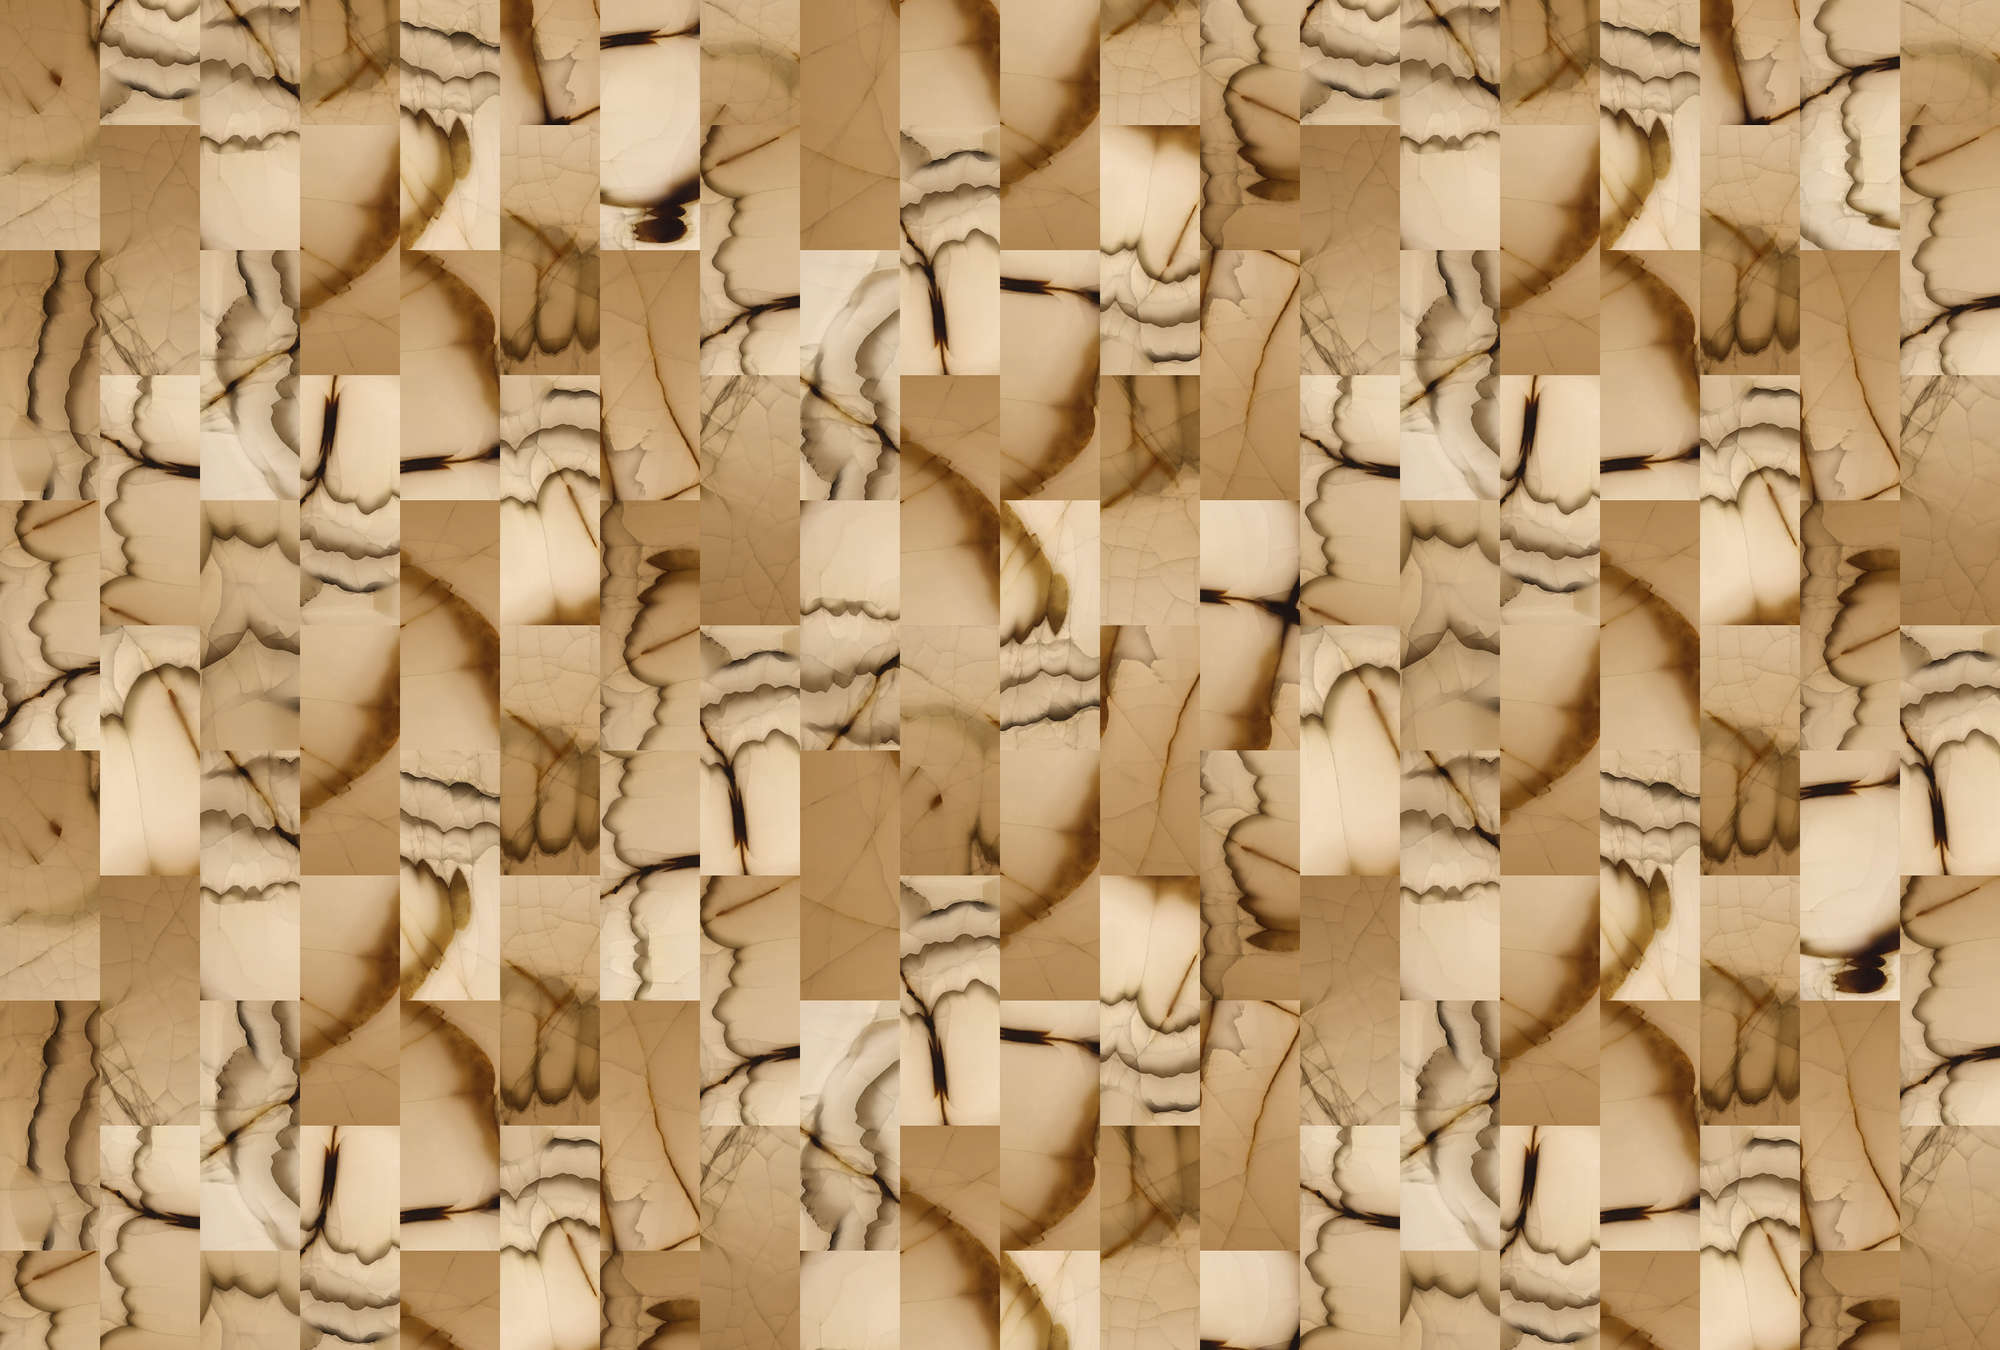             Cut stone 1 - Digital behang met steen look abstract - Beige, Bruin | Pearl glad non-woven
        